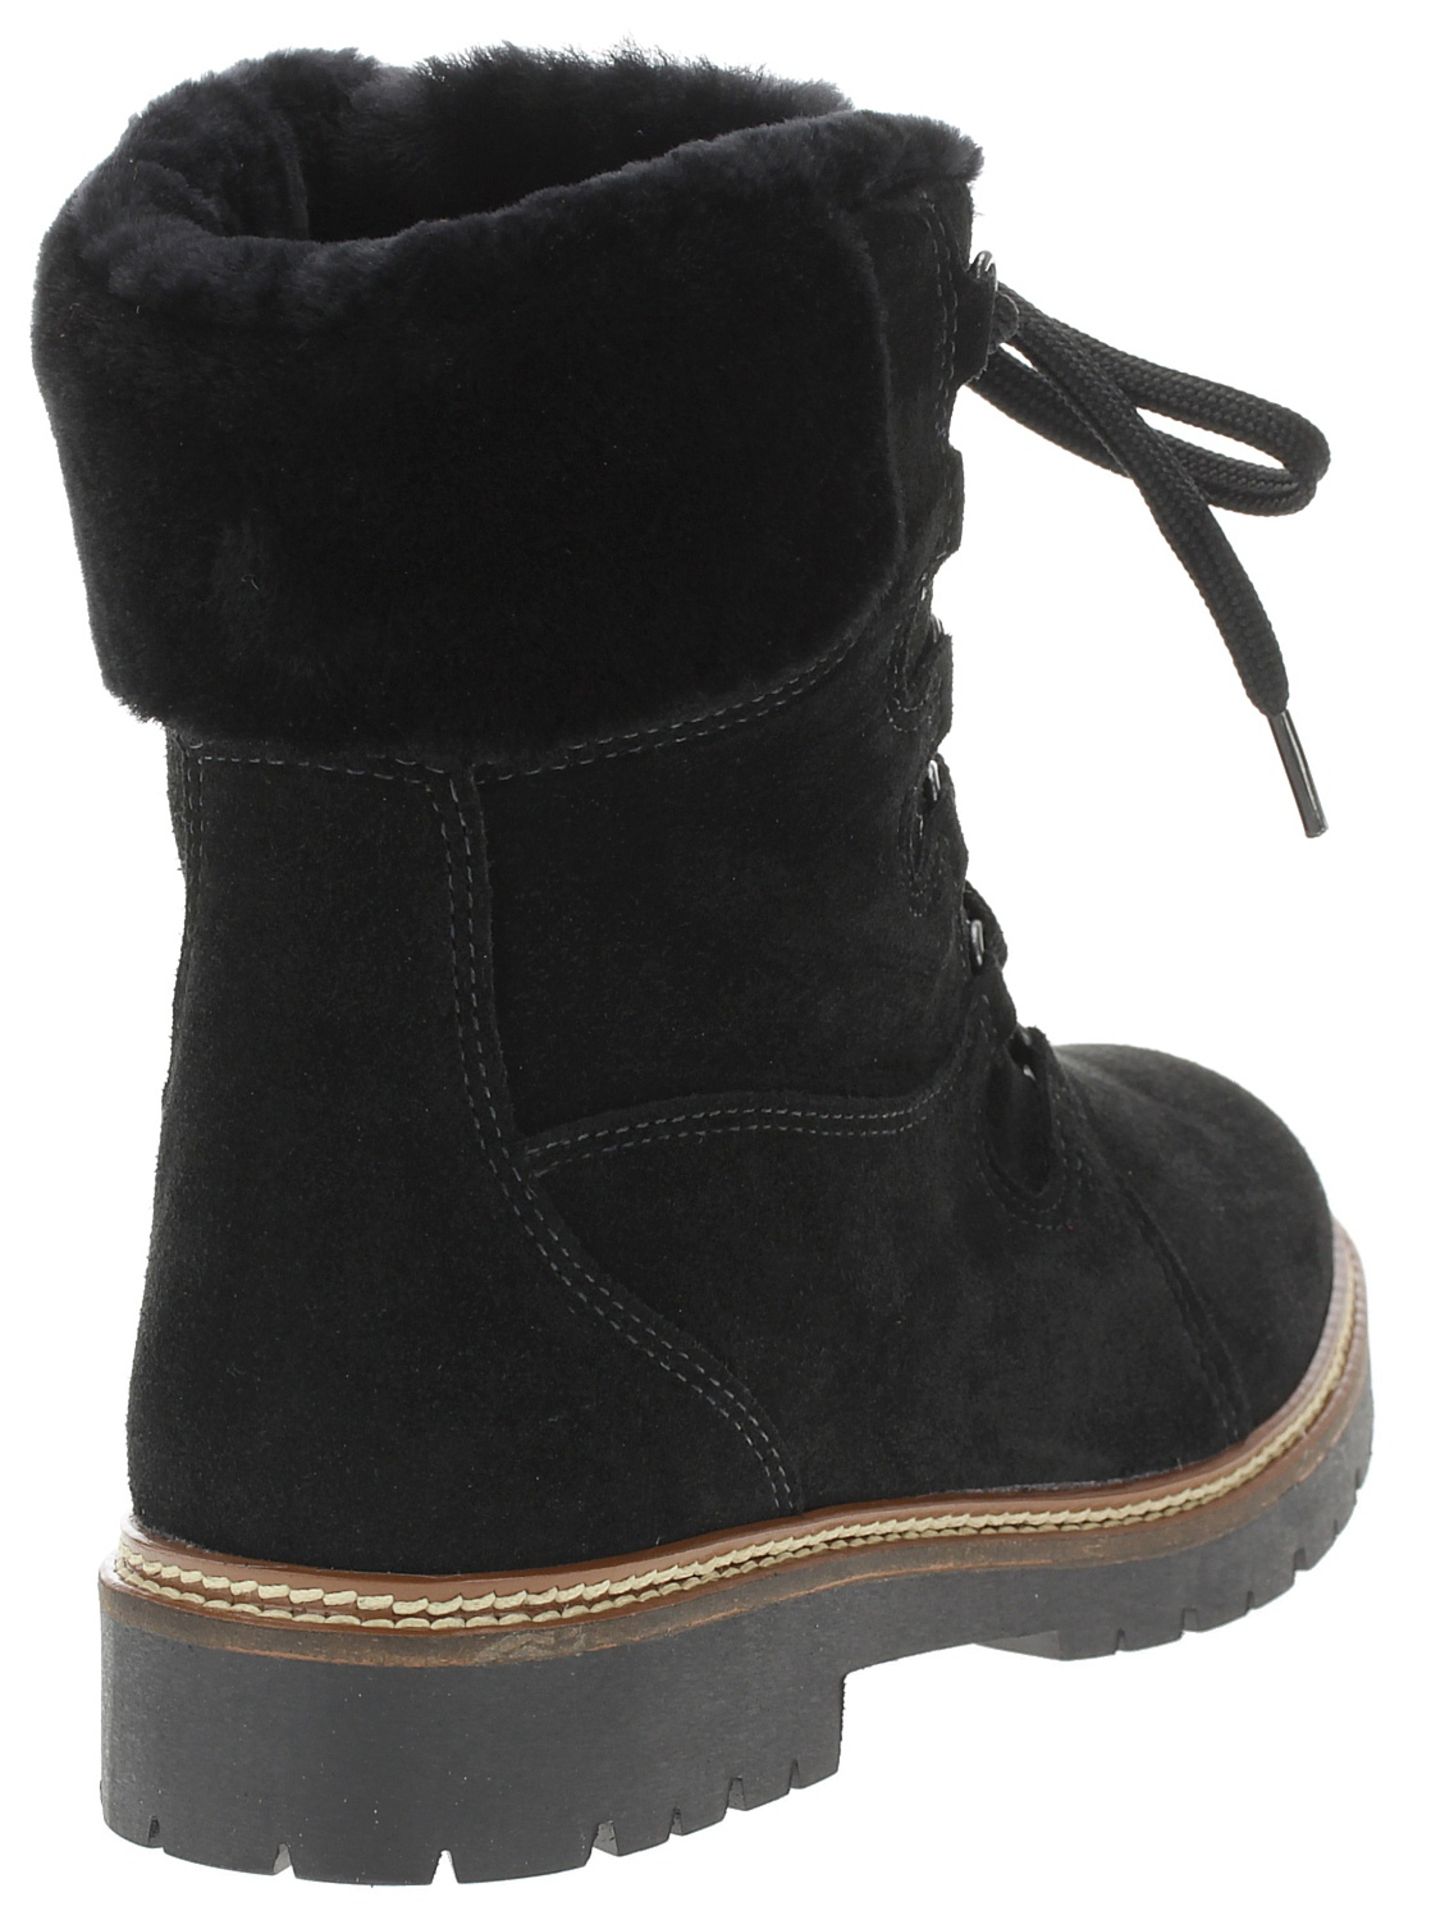 1 x Pair of Designer Olang Meribel 81 Nero Women's Winter Boots - Euro Size 41 - Brand New Boxed - Image 8 of 8